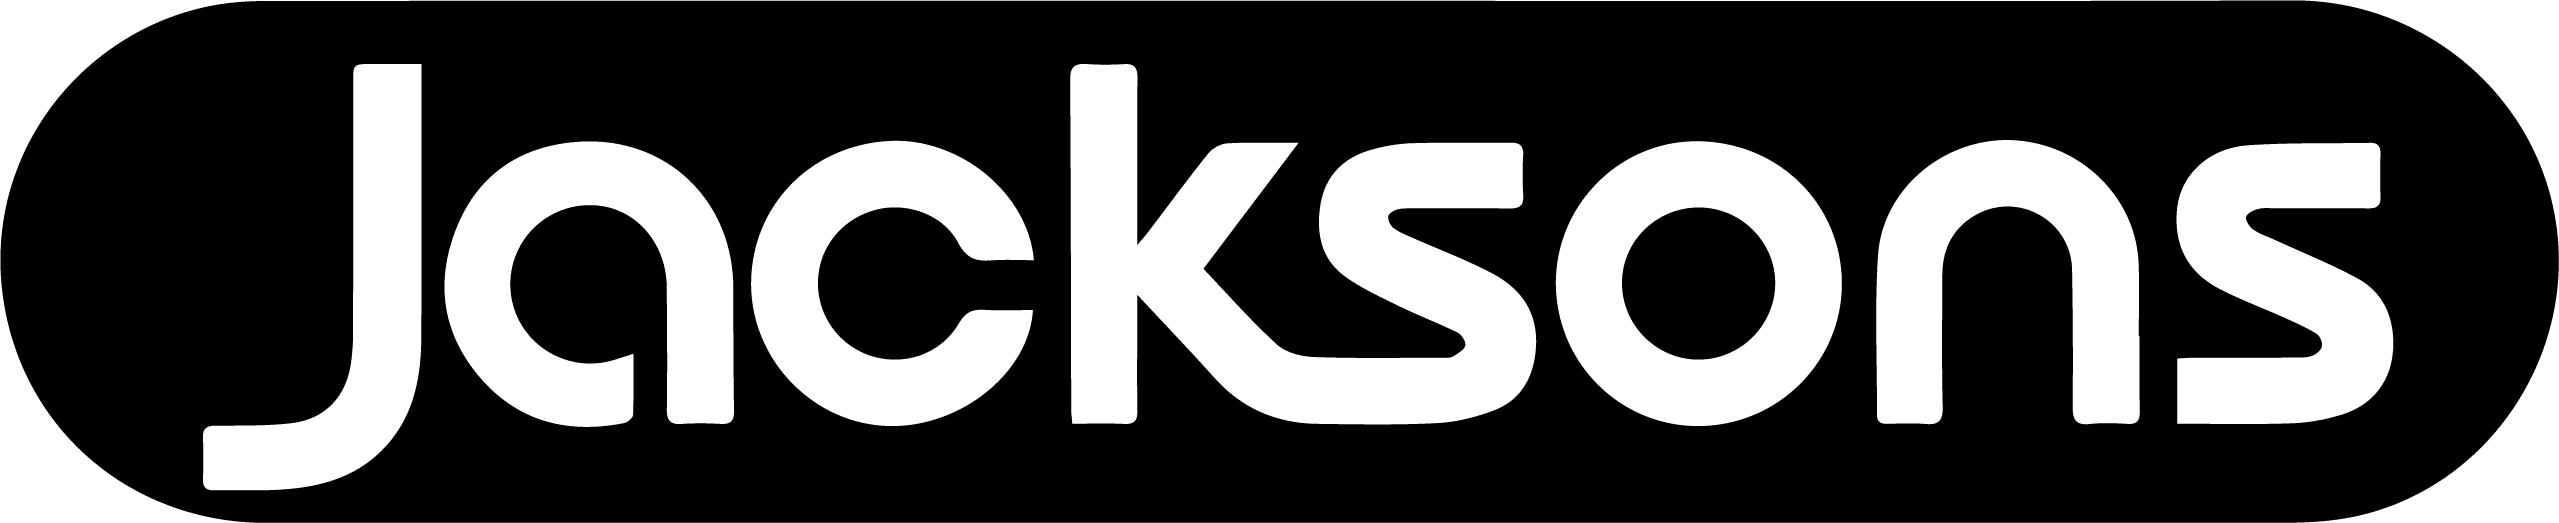 Jacksons_Logo Black